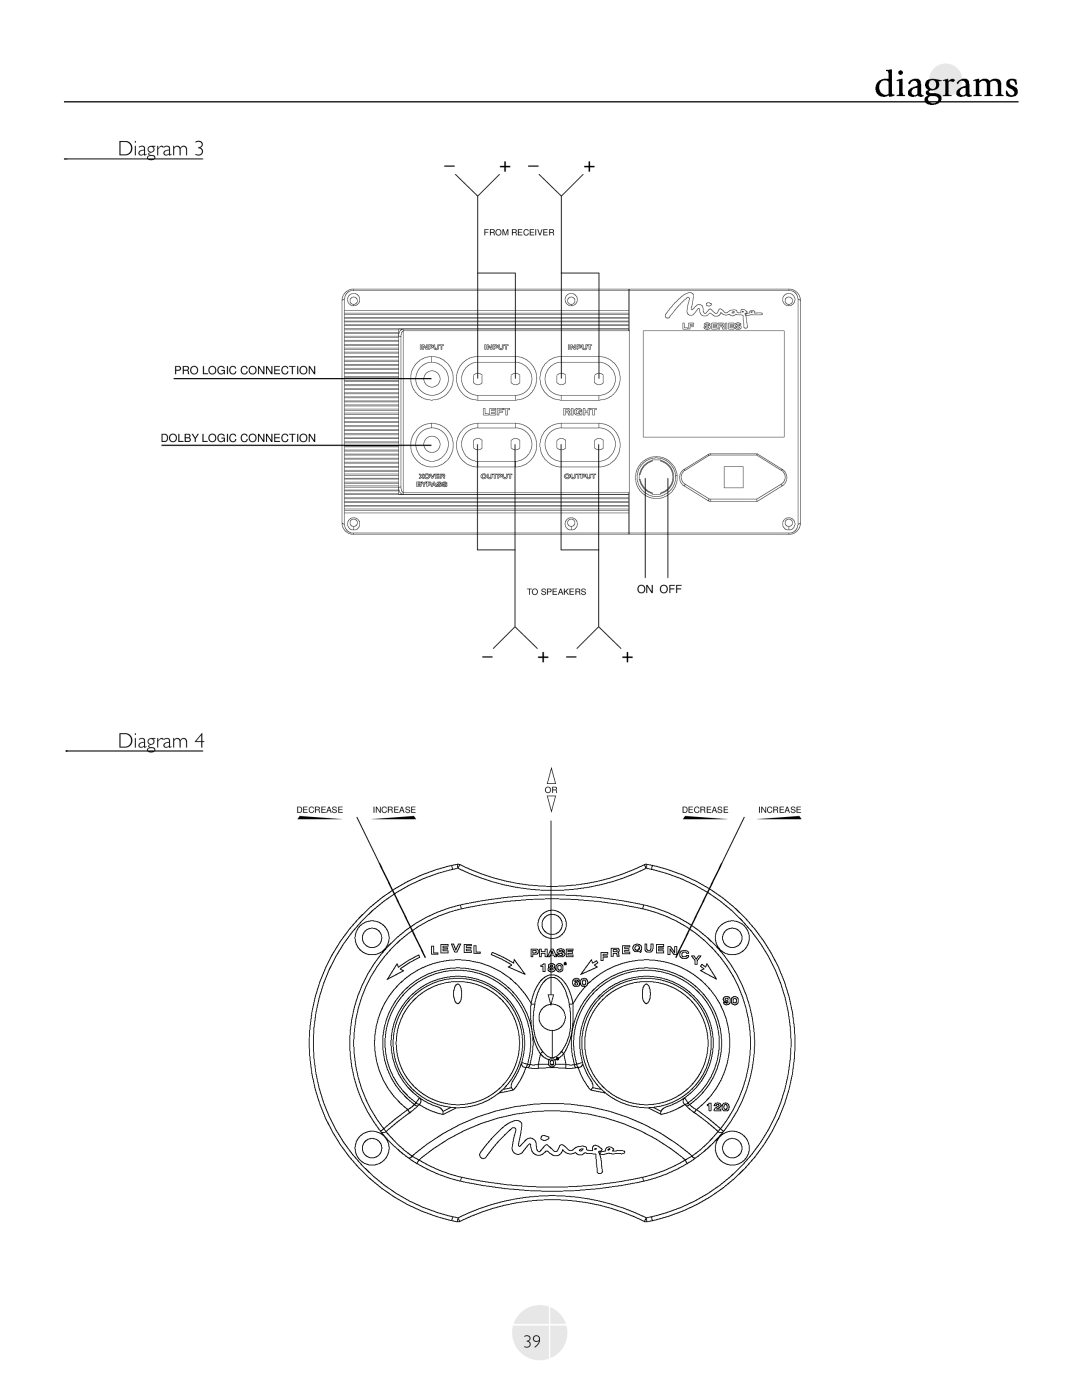 Mirage Loudspeakers LF-150, LF-100 Diagram + +, + + Diagram, diagrams, From Receiver, To Speakers, Decrease, Increase 